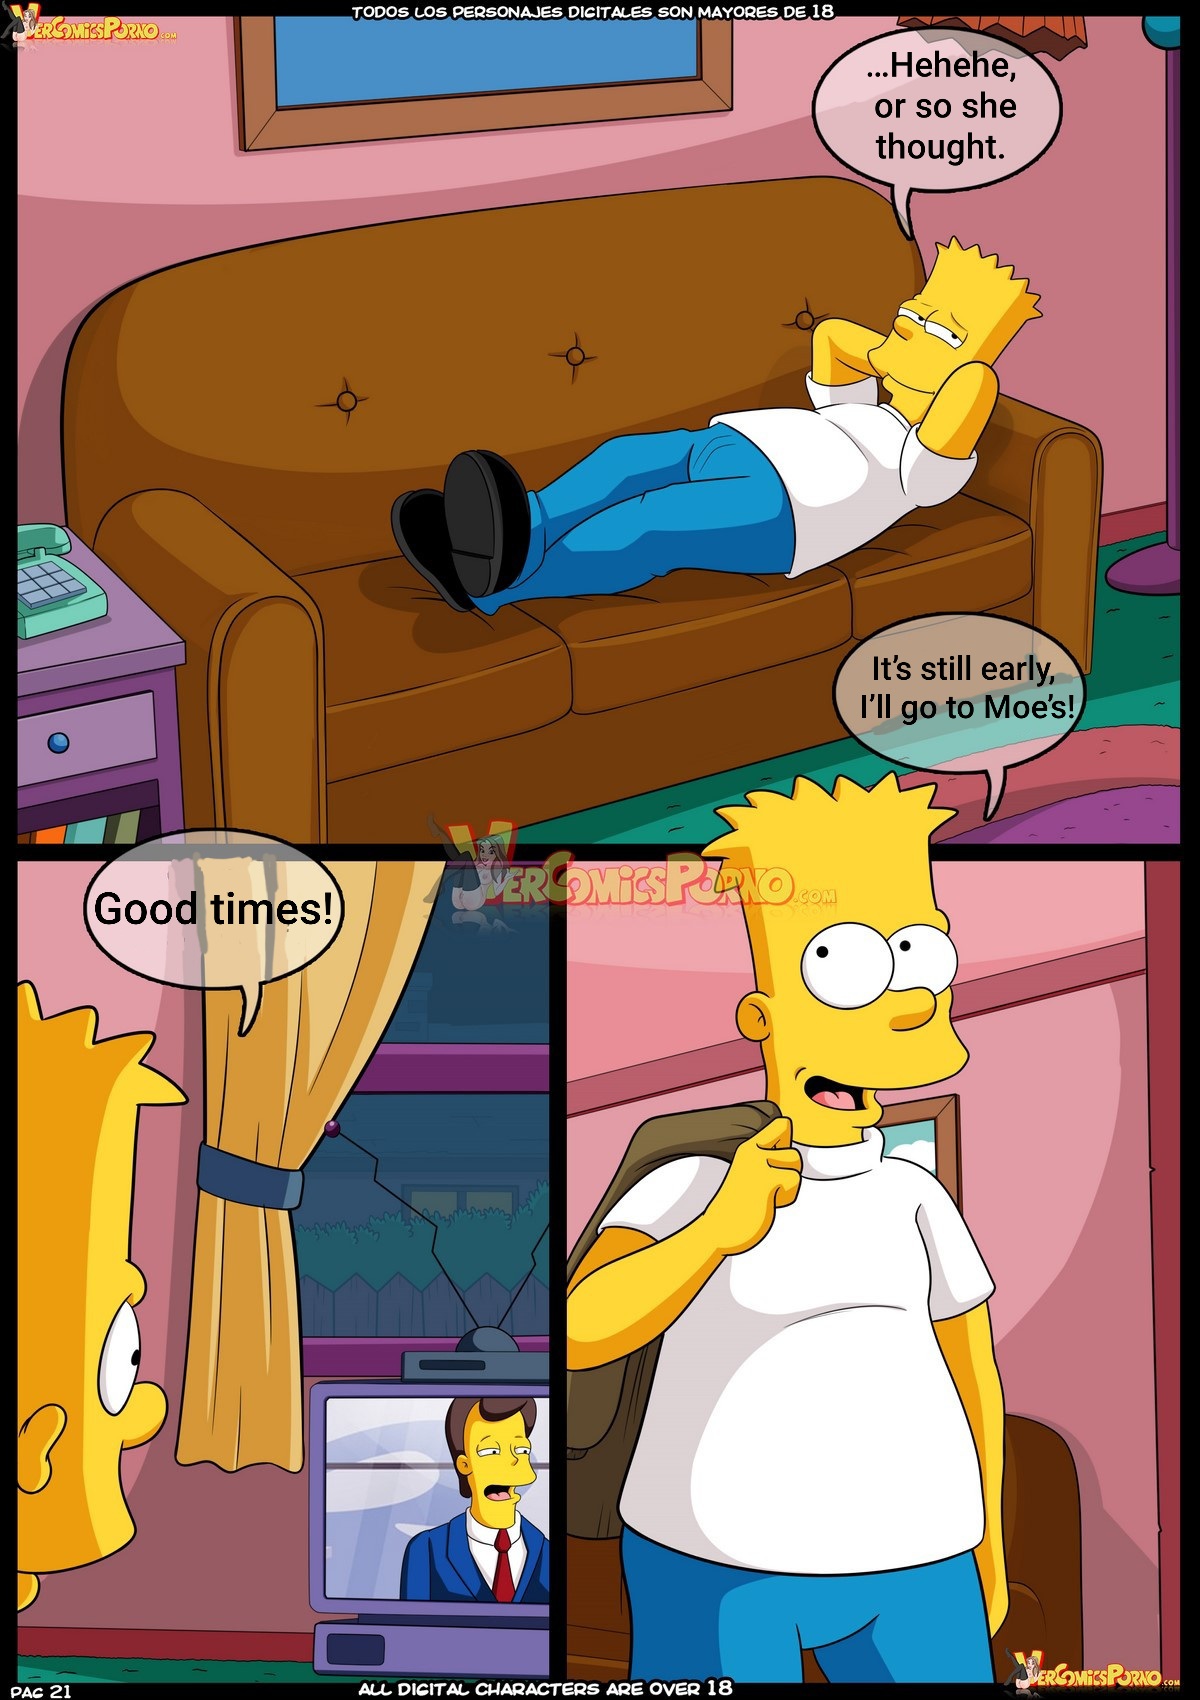 https://ilikecomix.com/comic/2021/04/Old-Habits-9-Croc-The-Simpsons-0022.jp...